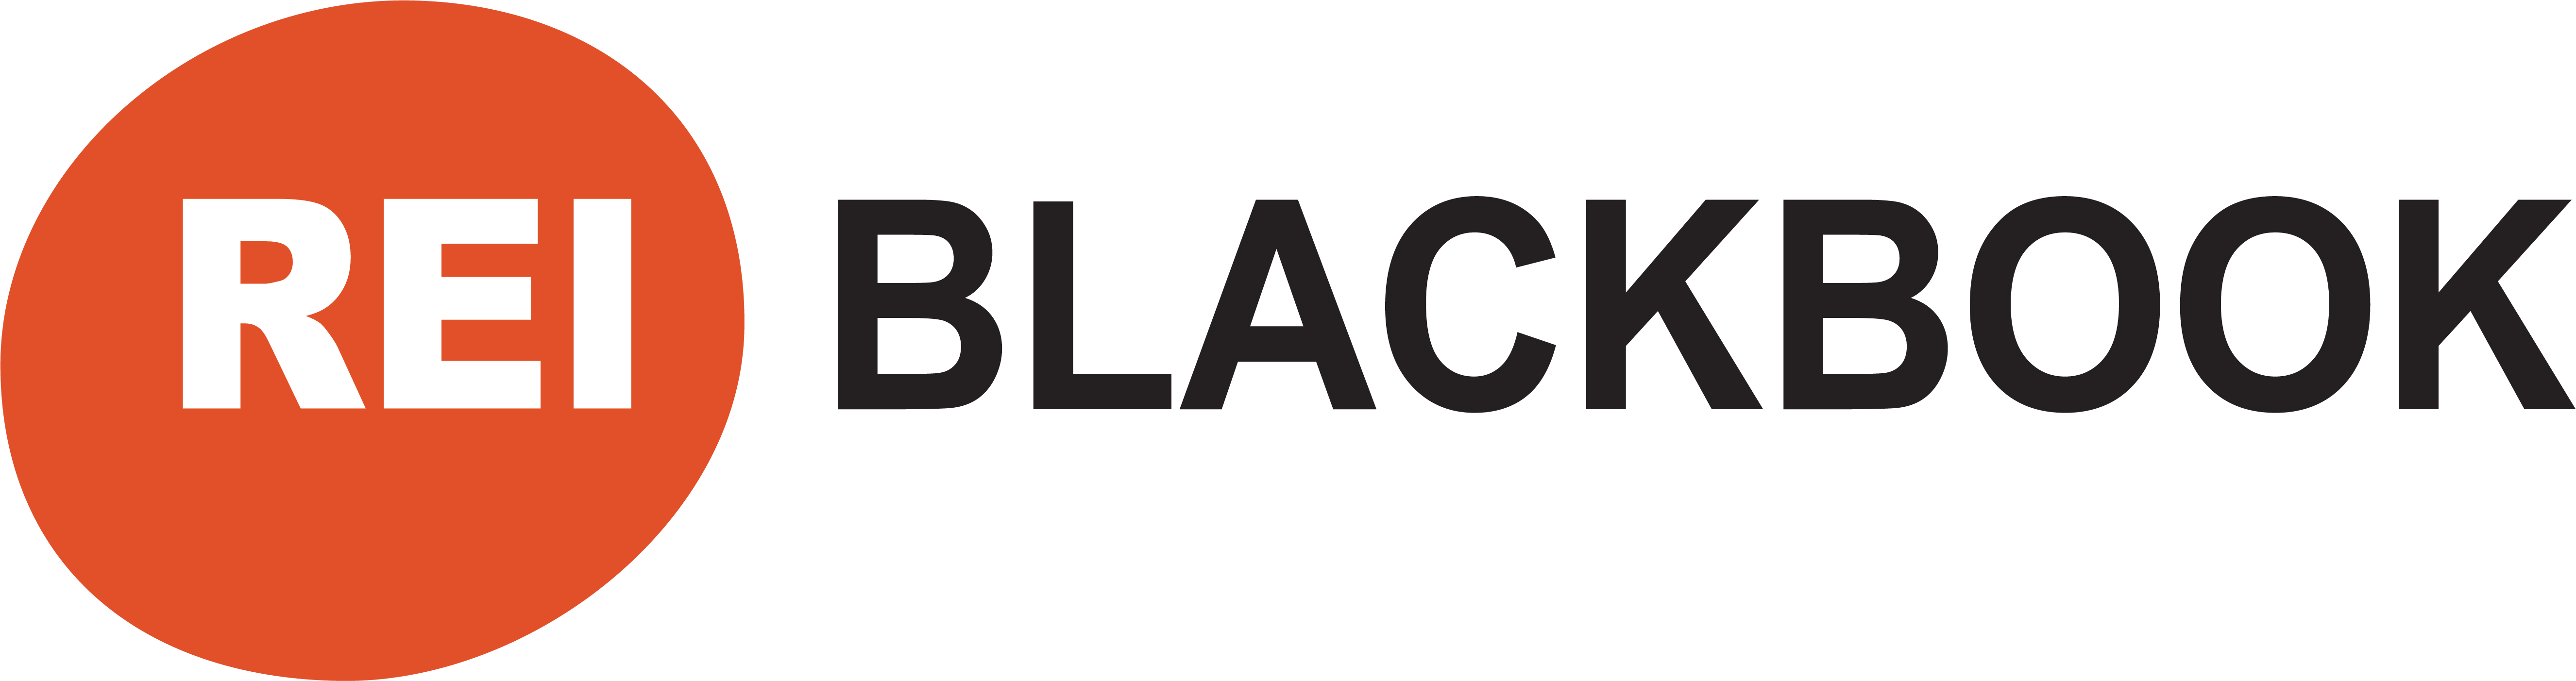 rei-blackbook-logo-black-1